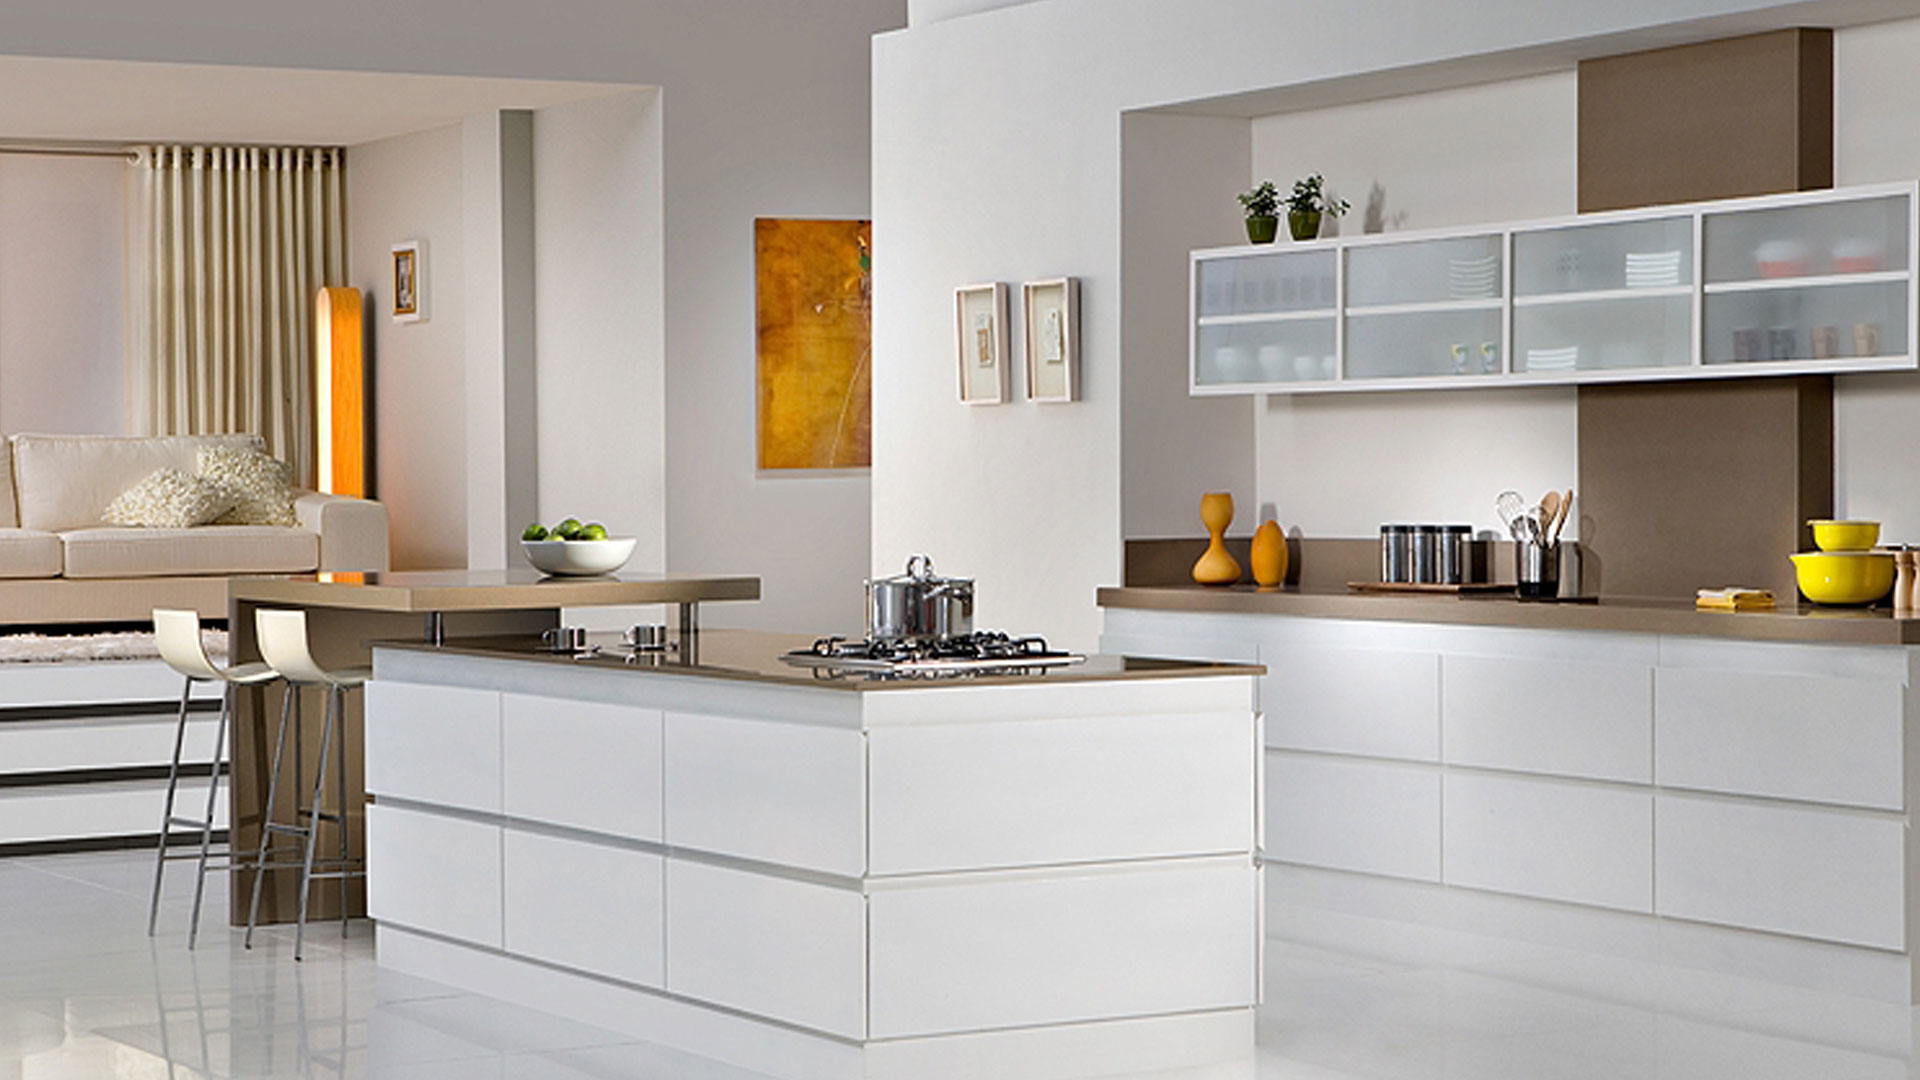 modern kitchen wallpaper designs,room,furniture,countertop,kitchen,property